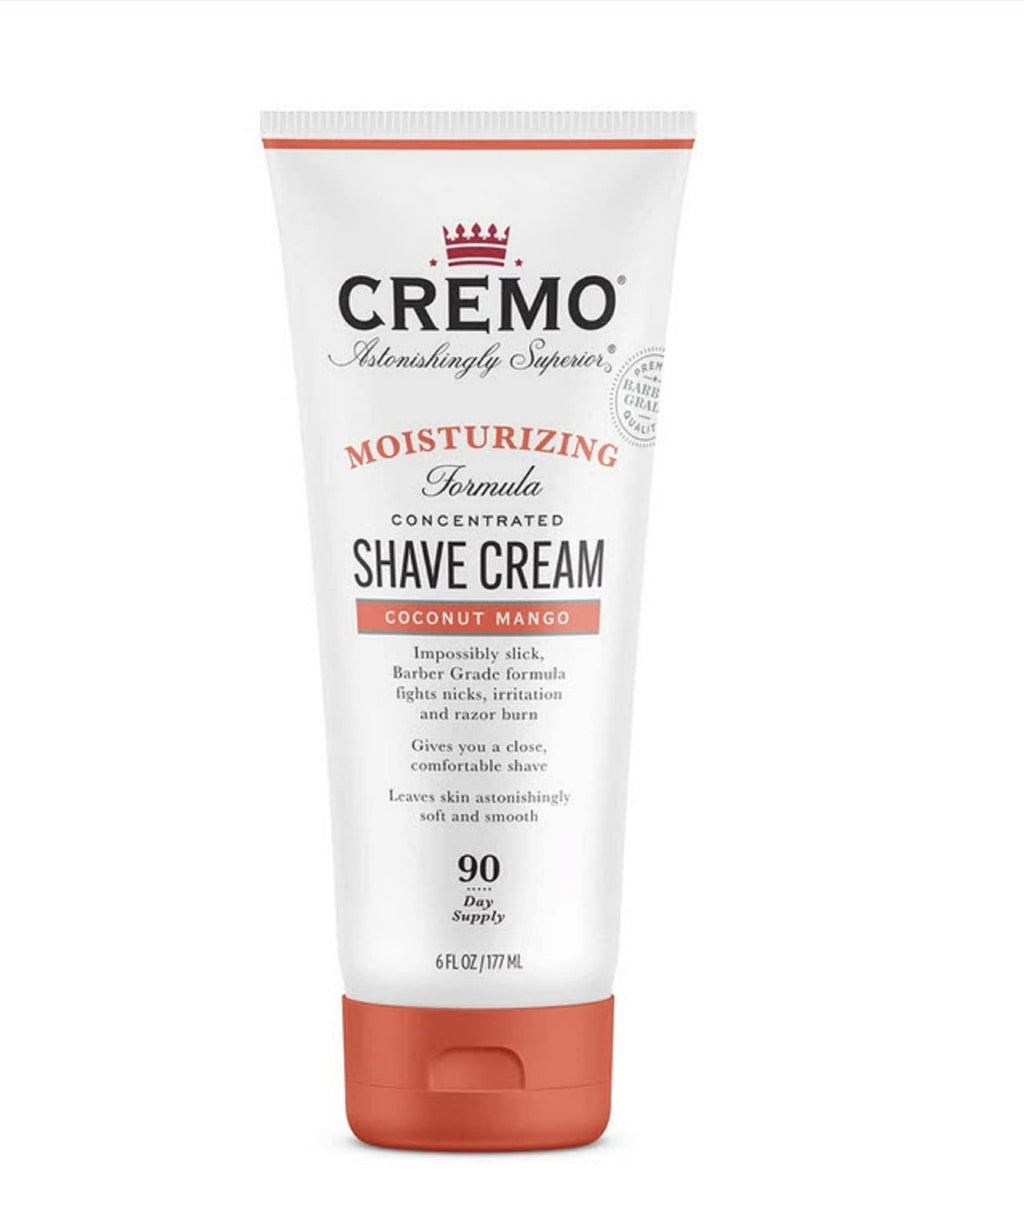 [Australia] - Cremo Coconut Mango Moisturizing Shave Cream, Astonishingly Superior Shaving Cream For Women, Fights Nicks, Cuts And Razor Burn, 6 Ounces 